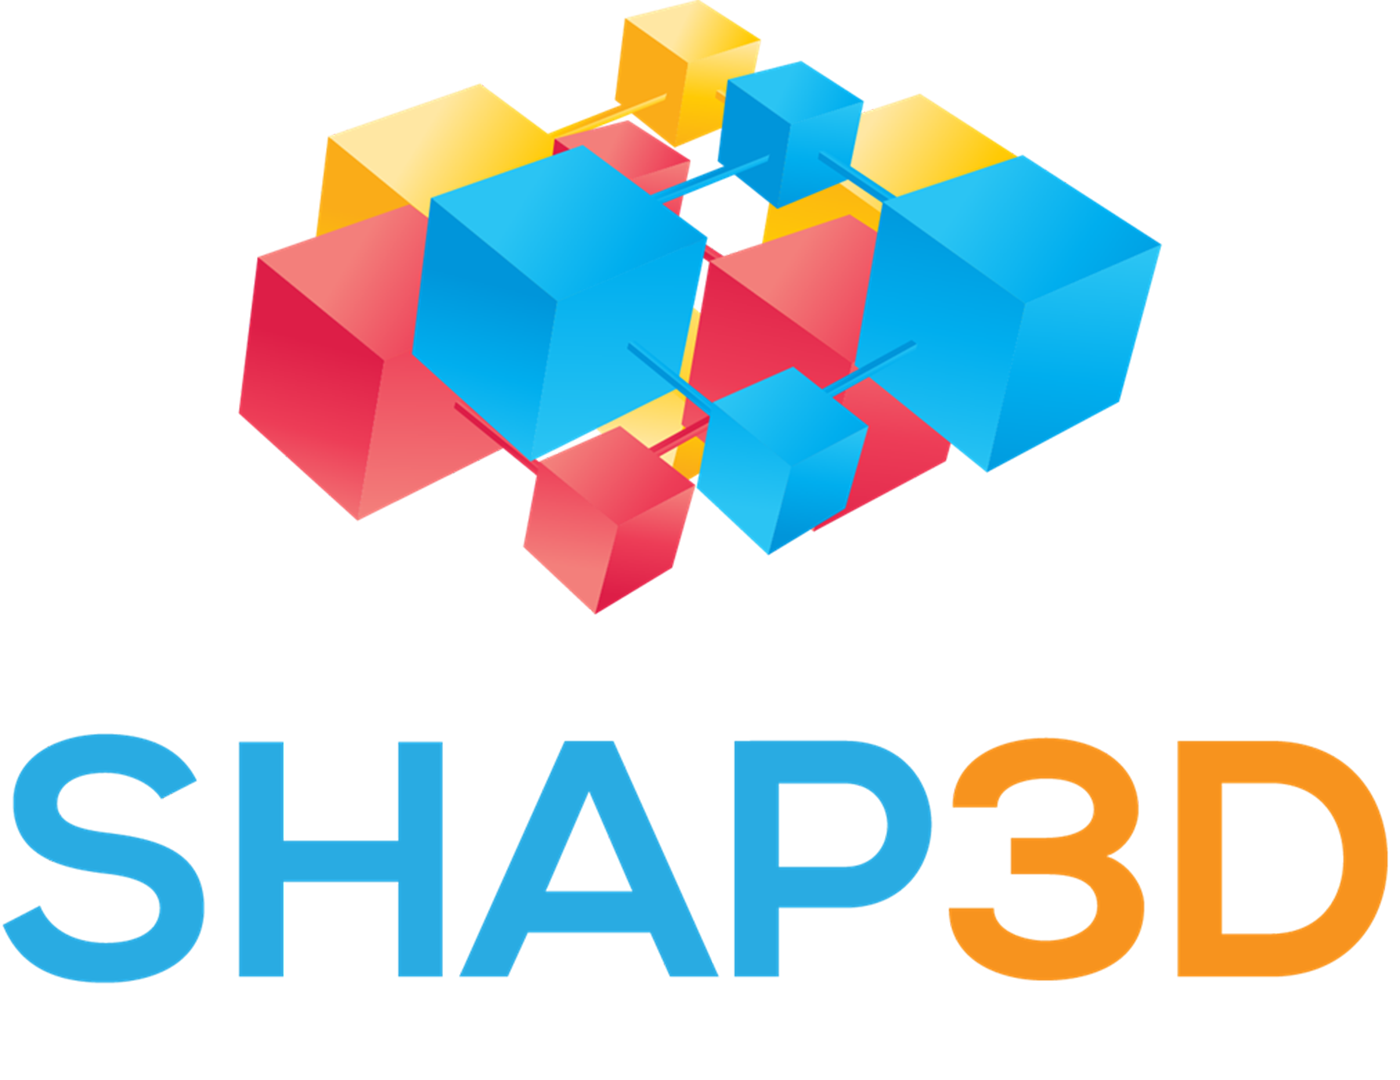 SHAP3D Logo